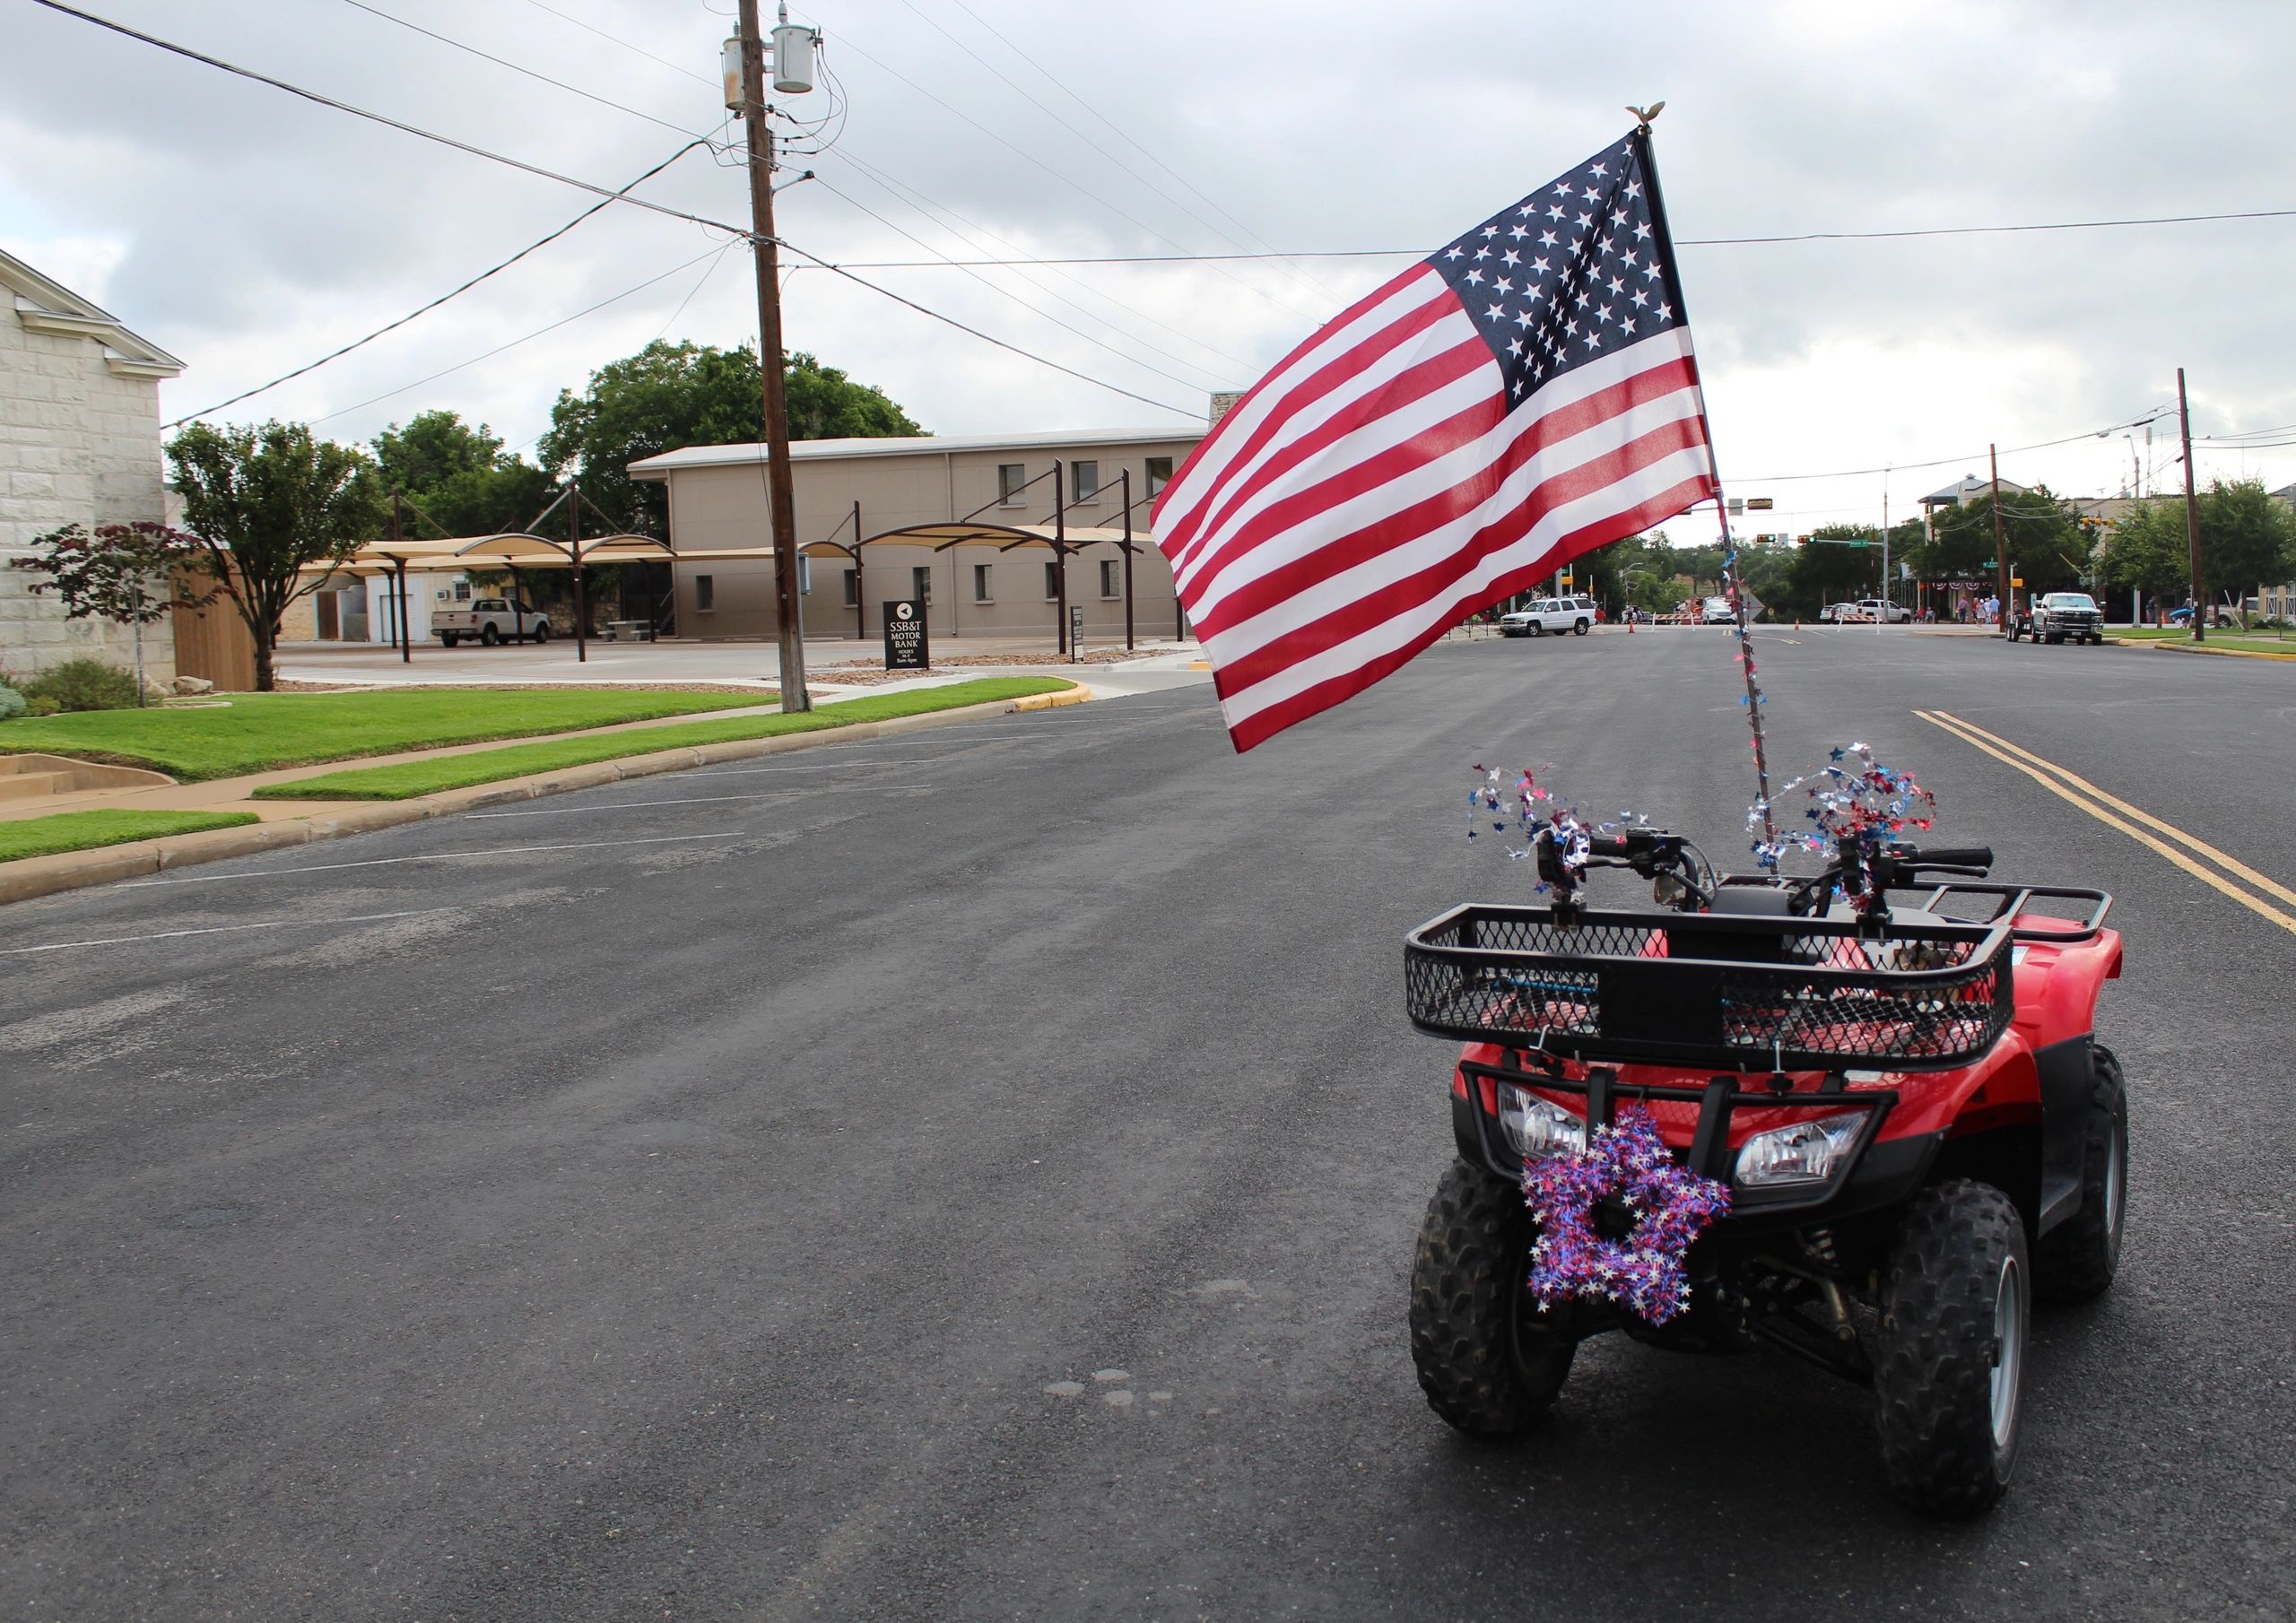 The Fredericksburg, Texas Fourth of July Parade